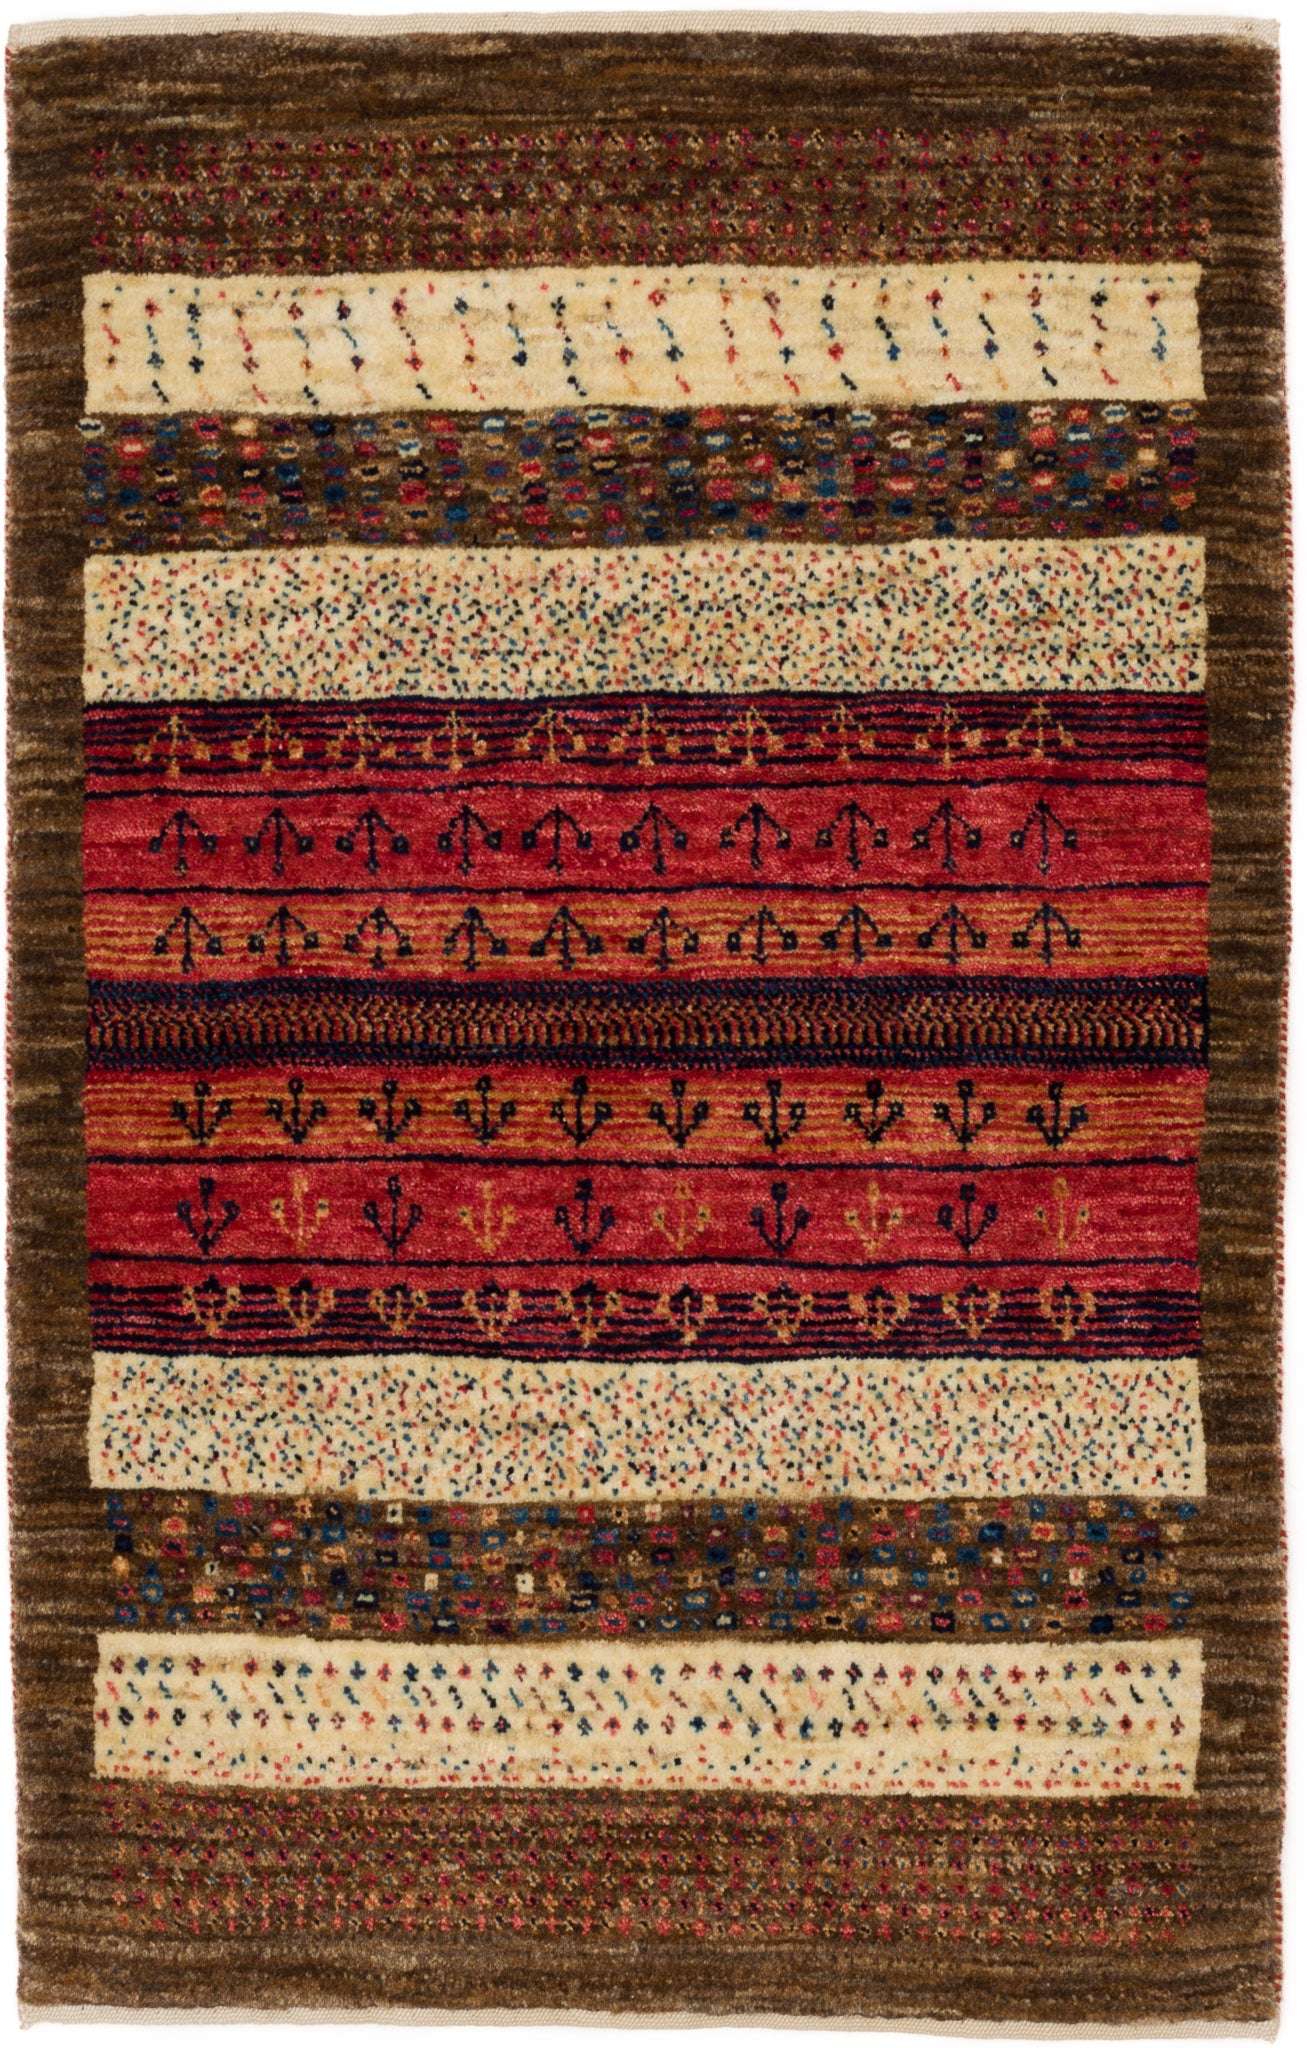 Kaschkuli Mirzai, 98 × 63 cm